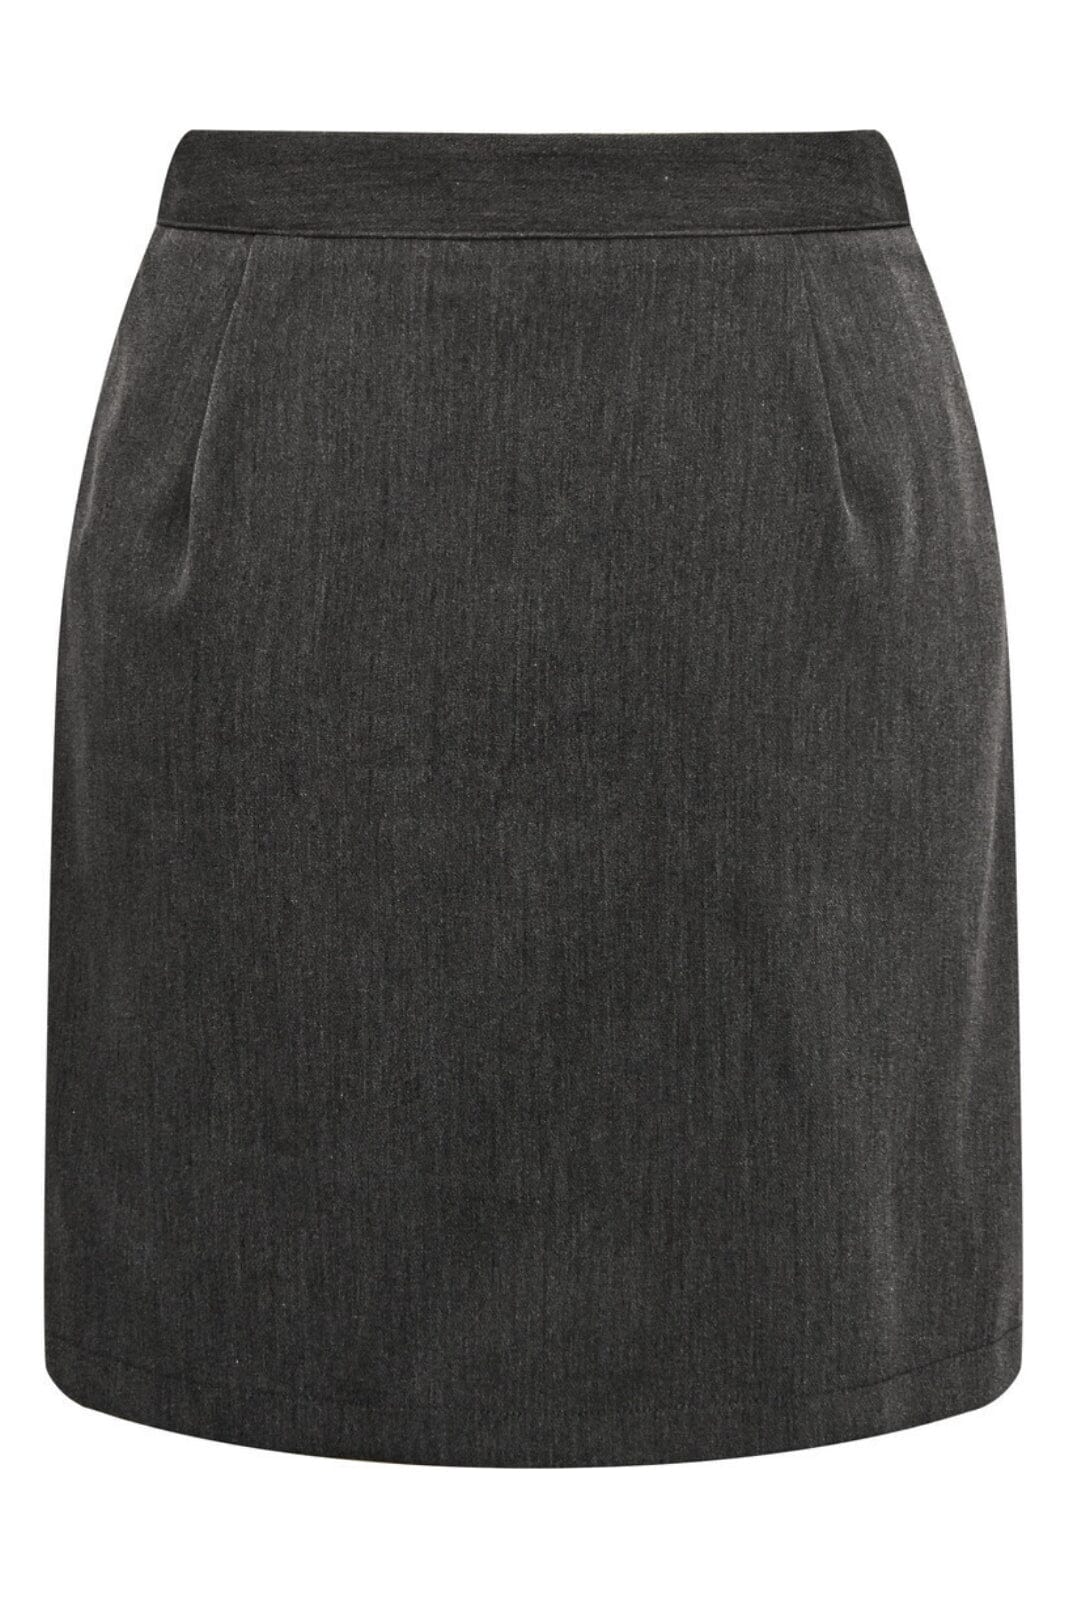 A-VIEW - Annali Skirt-1 - 905 Grey Nederdele 